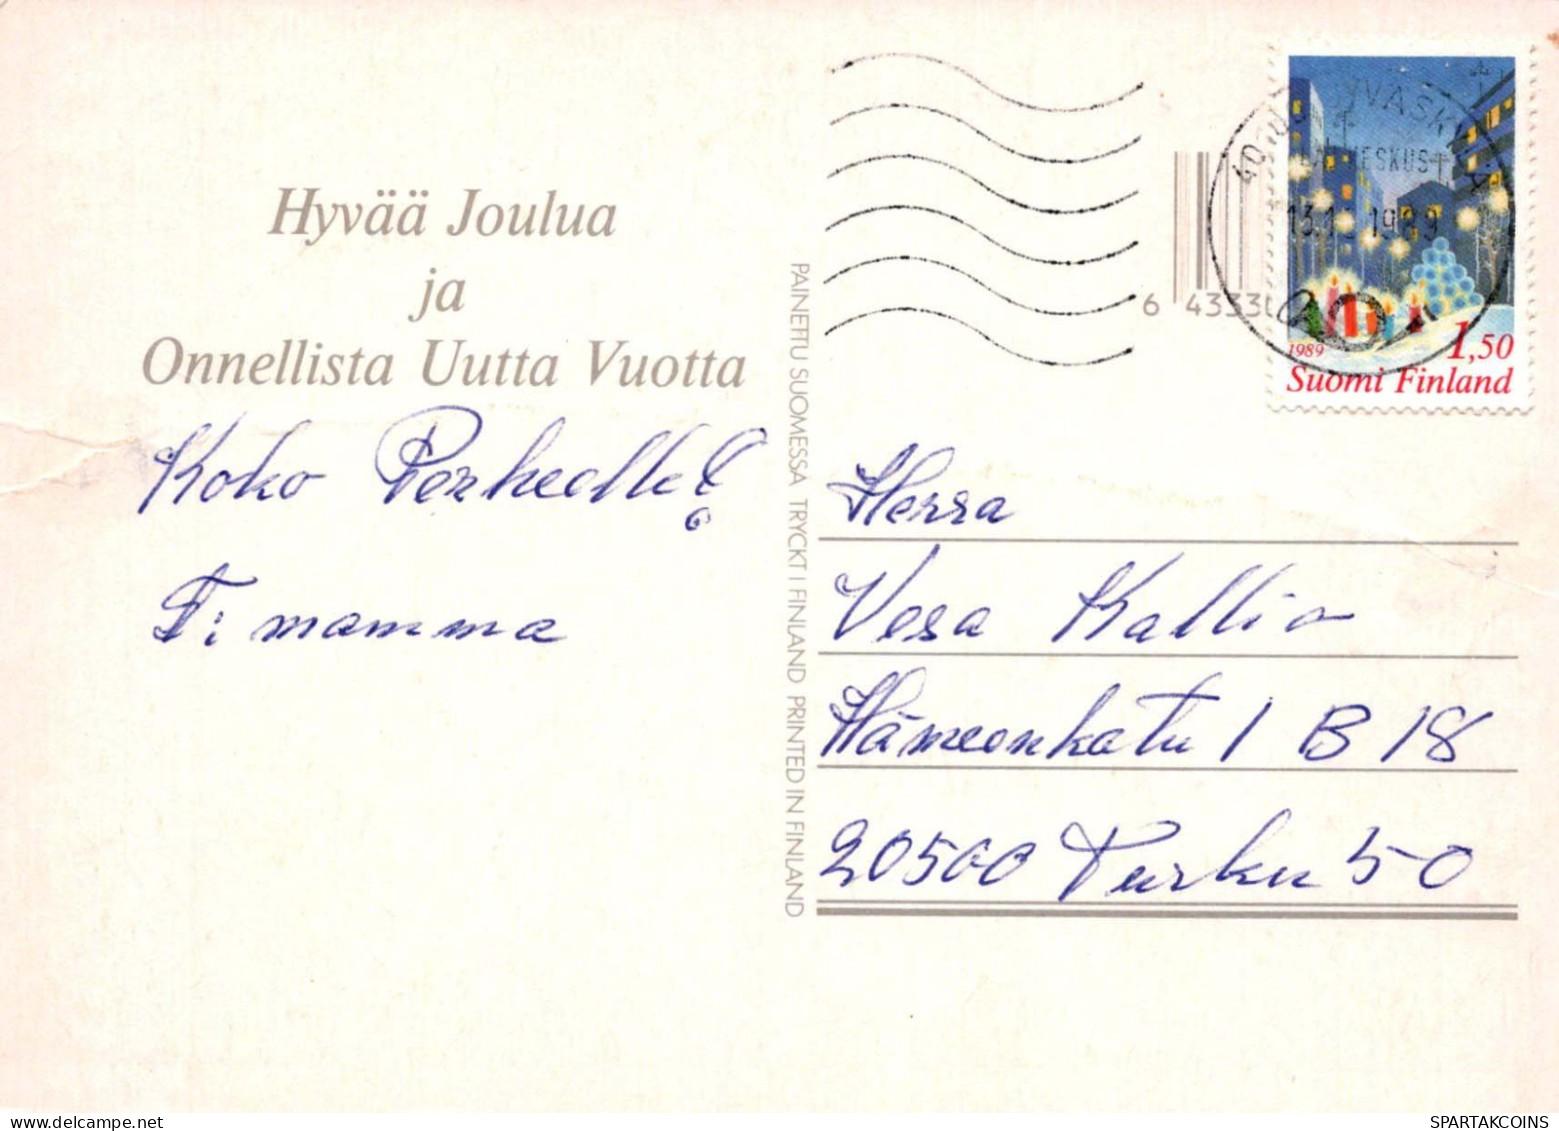 PAPÁ NOEL Feliz Año Navidad Vintage Tarjeta Postal CPSM #PBL379.A - Santa Claus